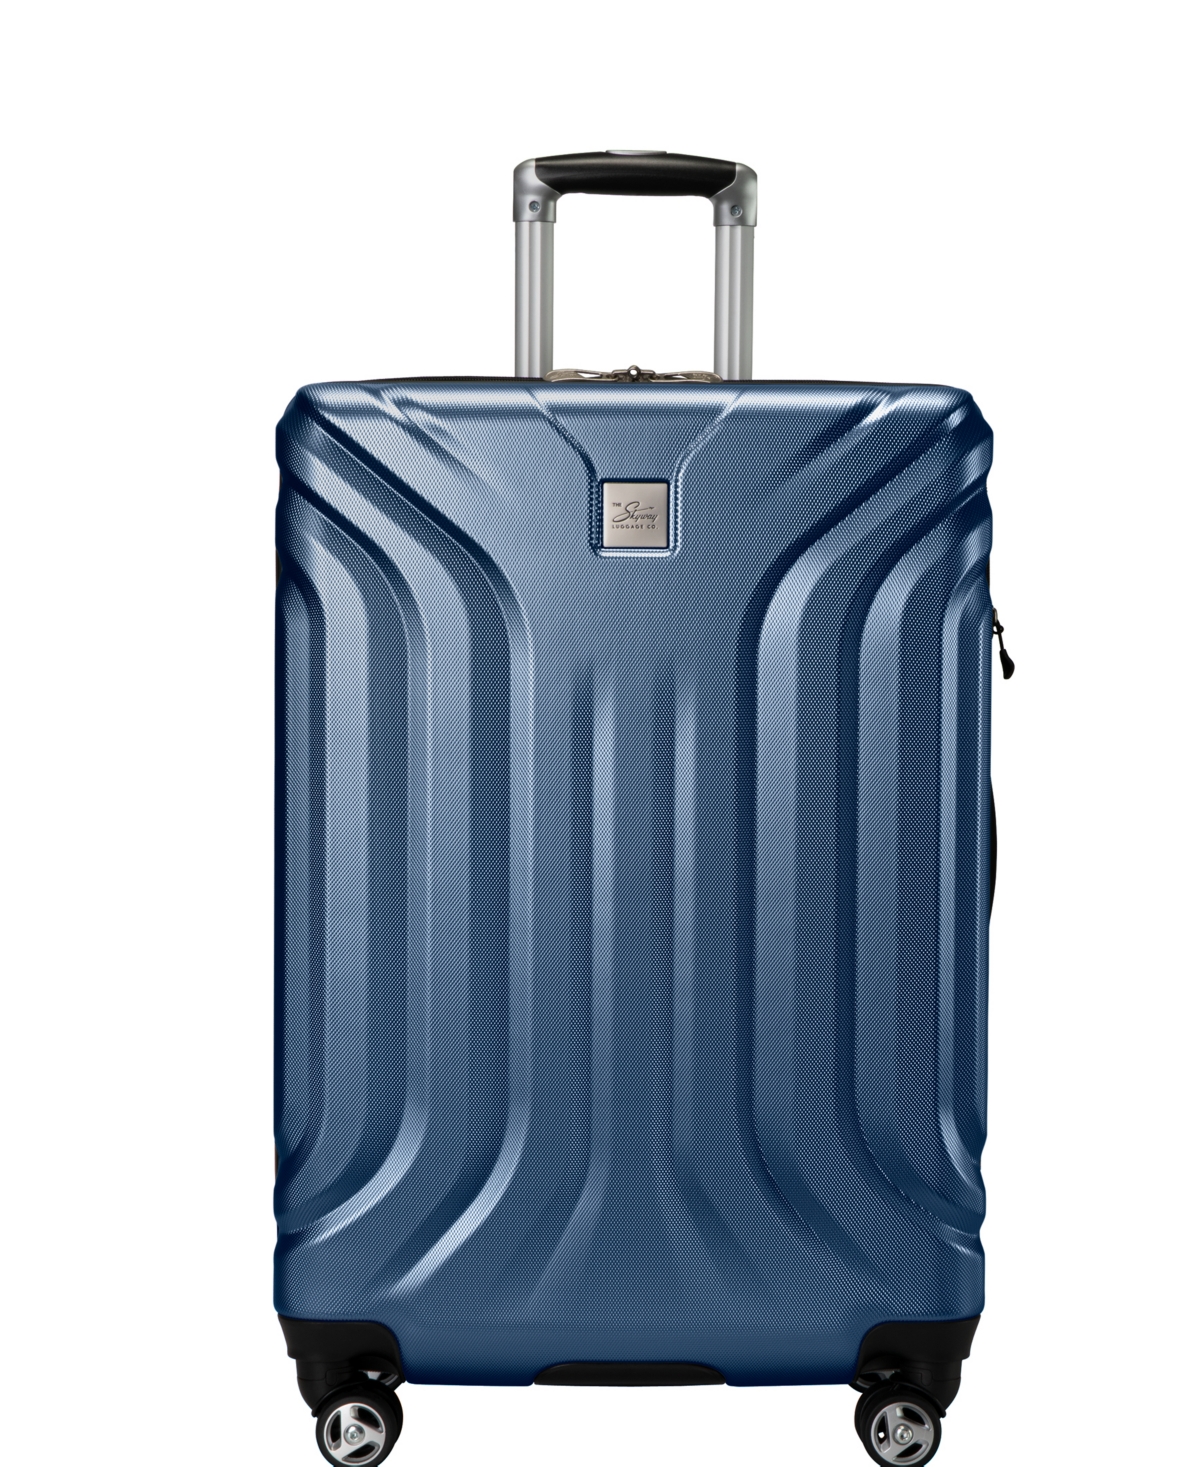 Skyway Nimbus 4.0 24" Hardside Medium Check-in Suitcase In Maritime Blue